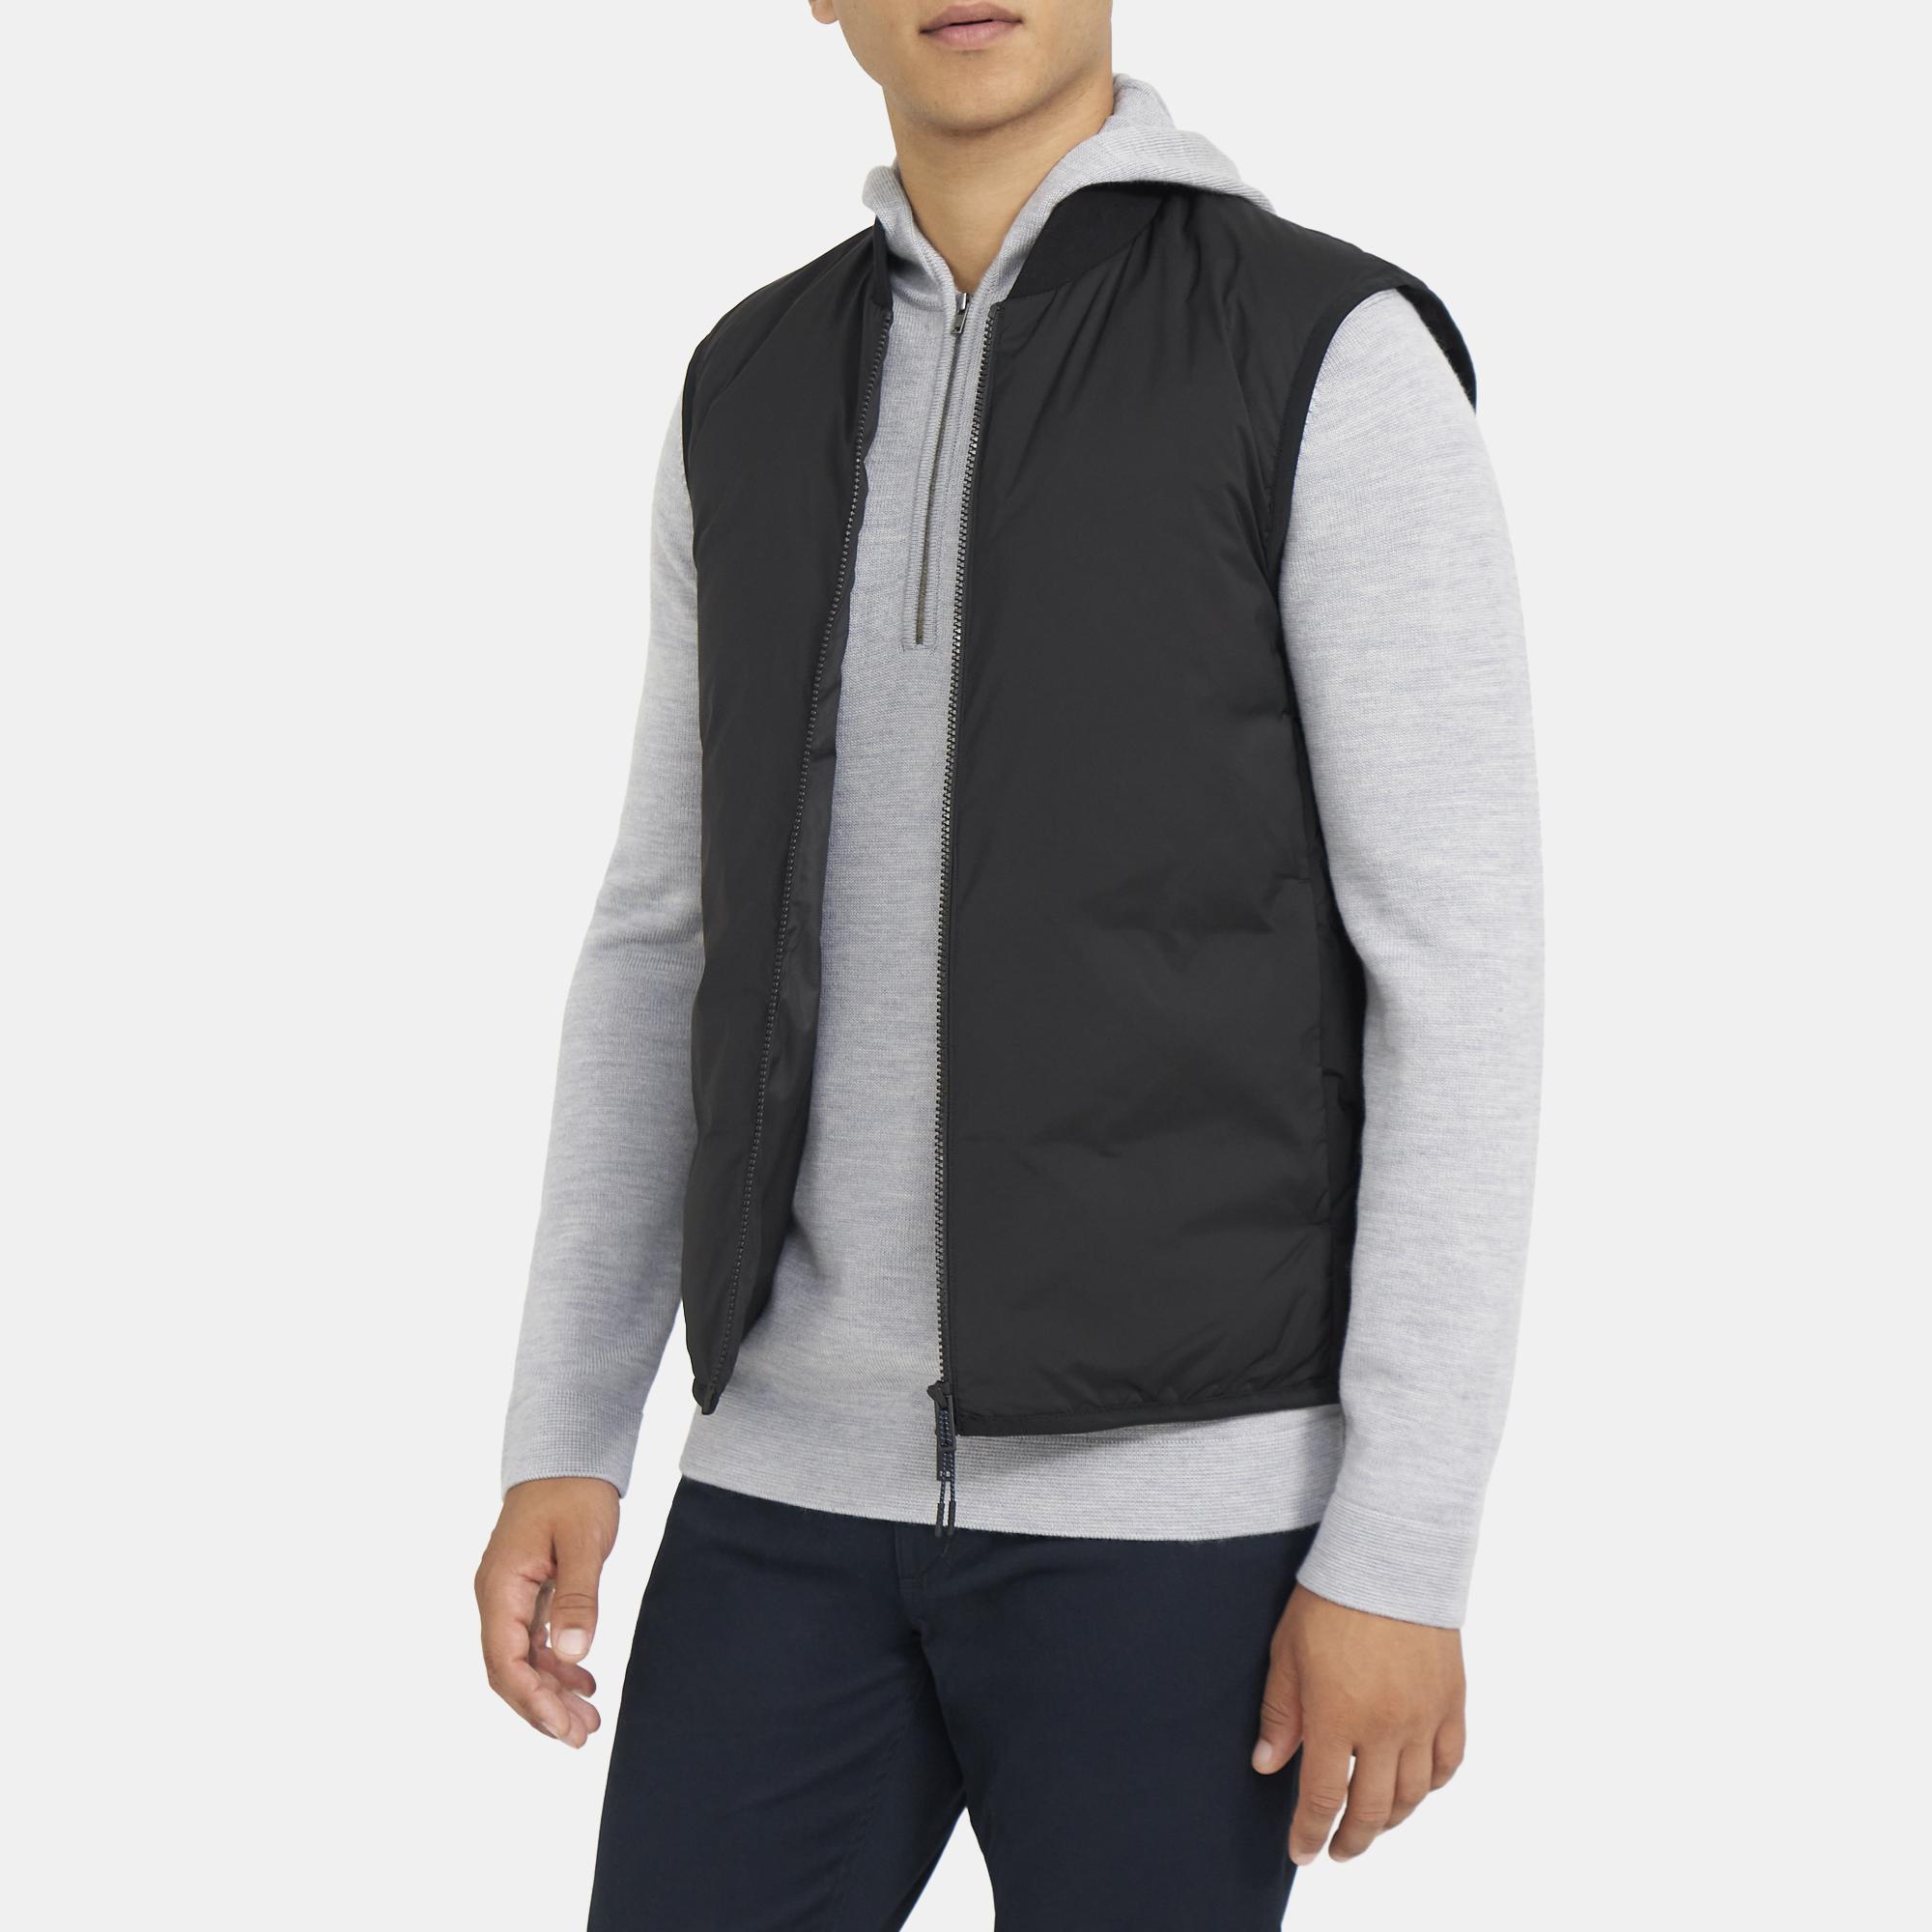 PetLuxLV Double-Sided Coat Vest